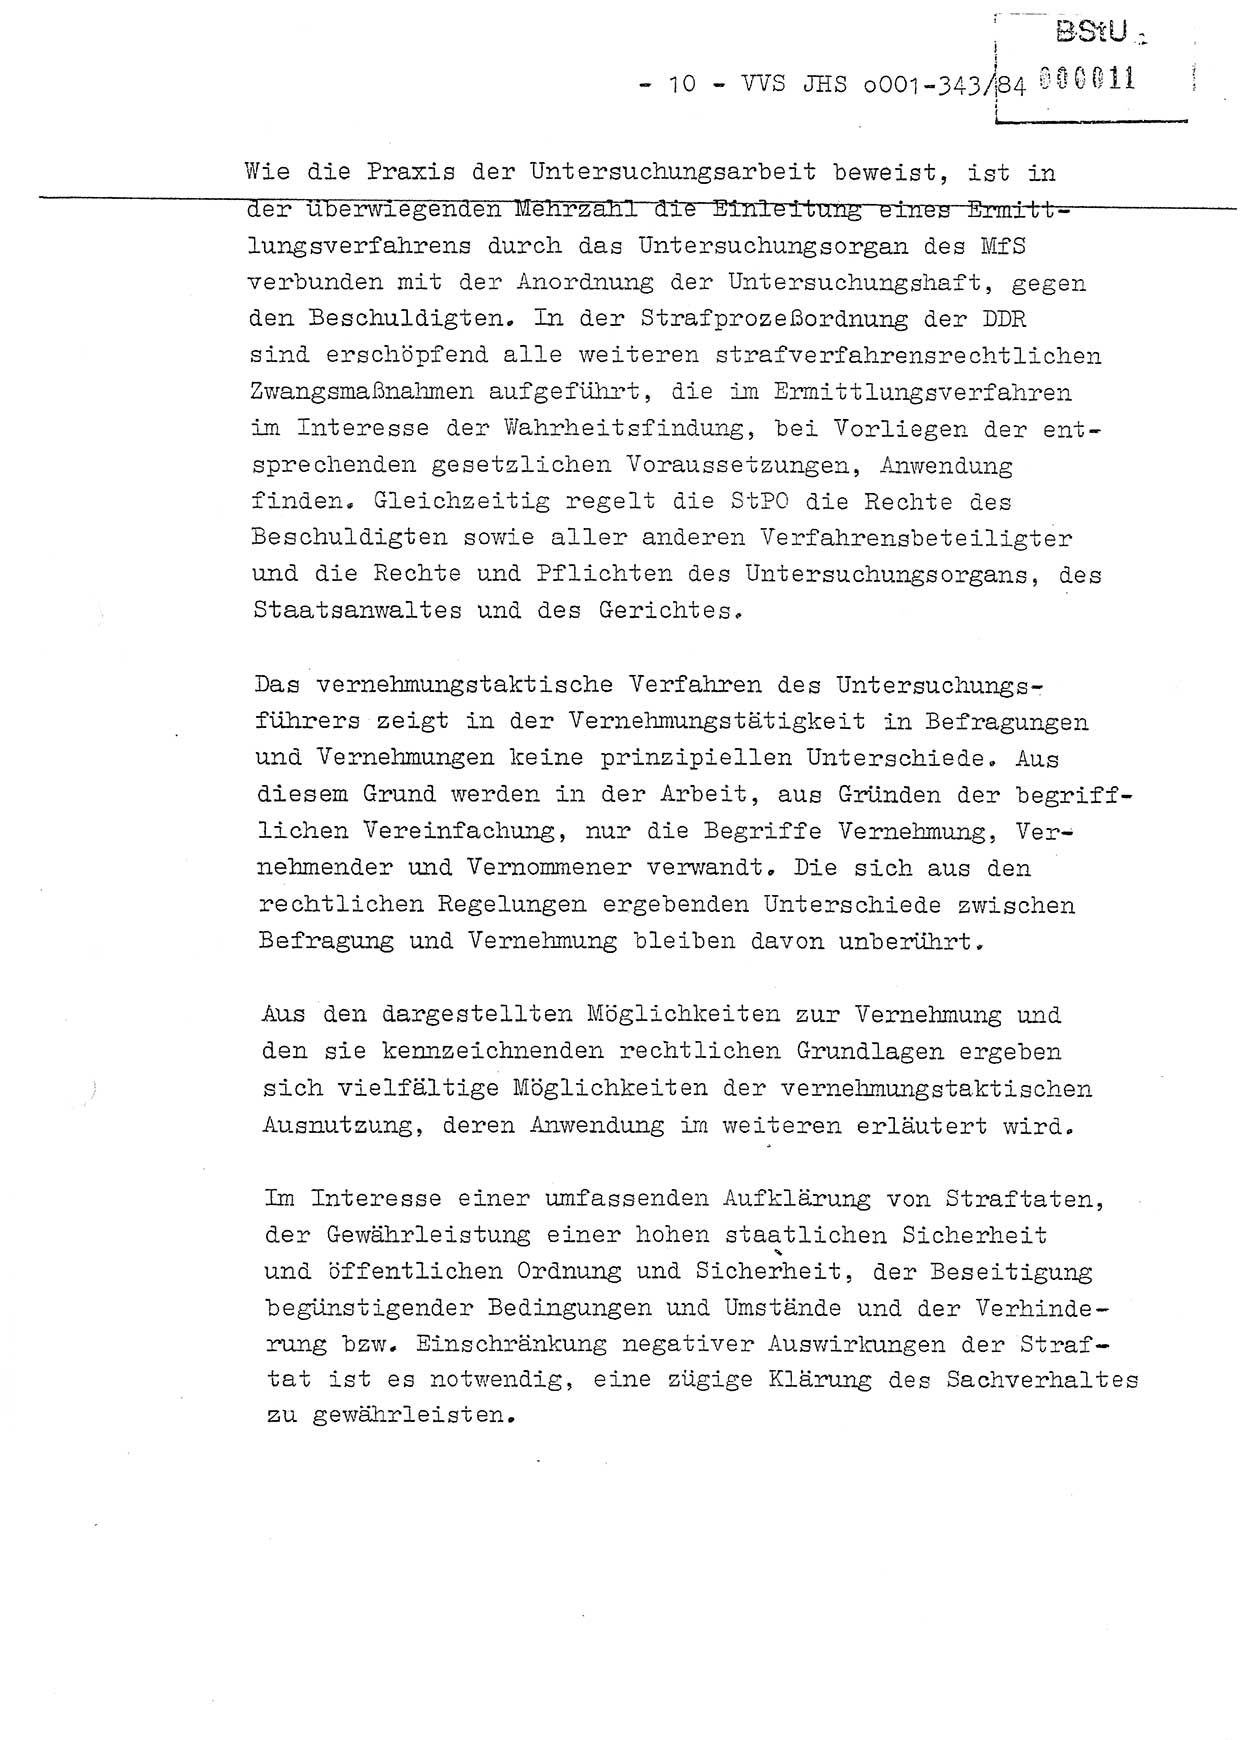 Diplomarbeit, Oberleutnant Bernd Michael (HA Ⅸ/5), Oberleutnant Peter Felber (HA IX/5), Ministerium für Staatssicherheit (MfS) [Deutsche Demokratische Republik (DDR)], Juristische Hochschule (JHS), Vertrauliche Verschlußsache (VVS) o001-343/84, Potsdam 1985, Seite 10 (Dipl.-Arb. MfS DDR JHS VVS o001-343/84 1985, S. 10)